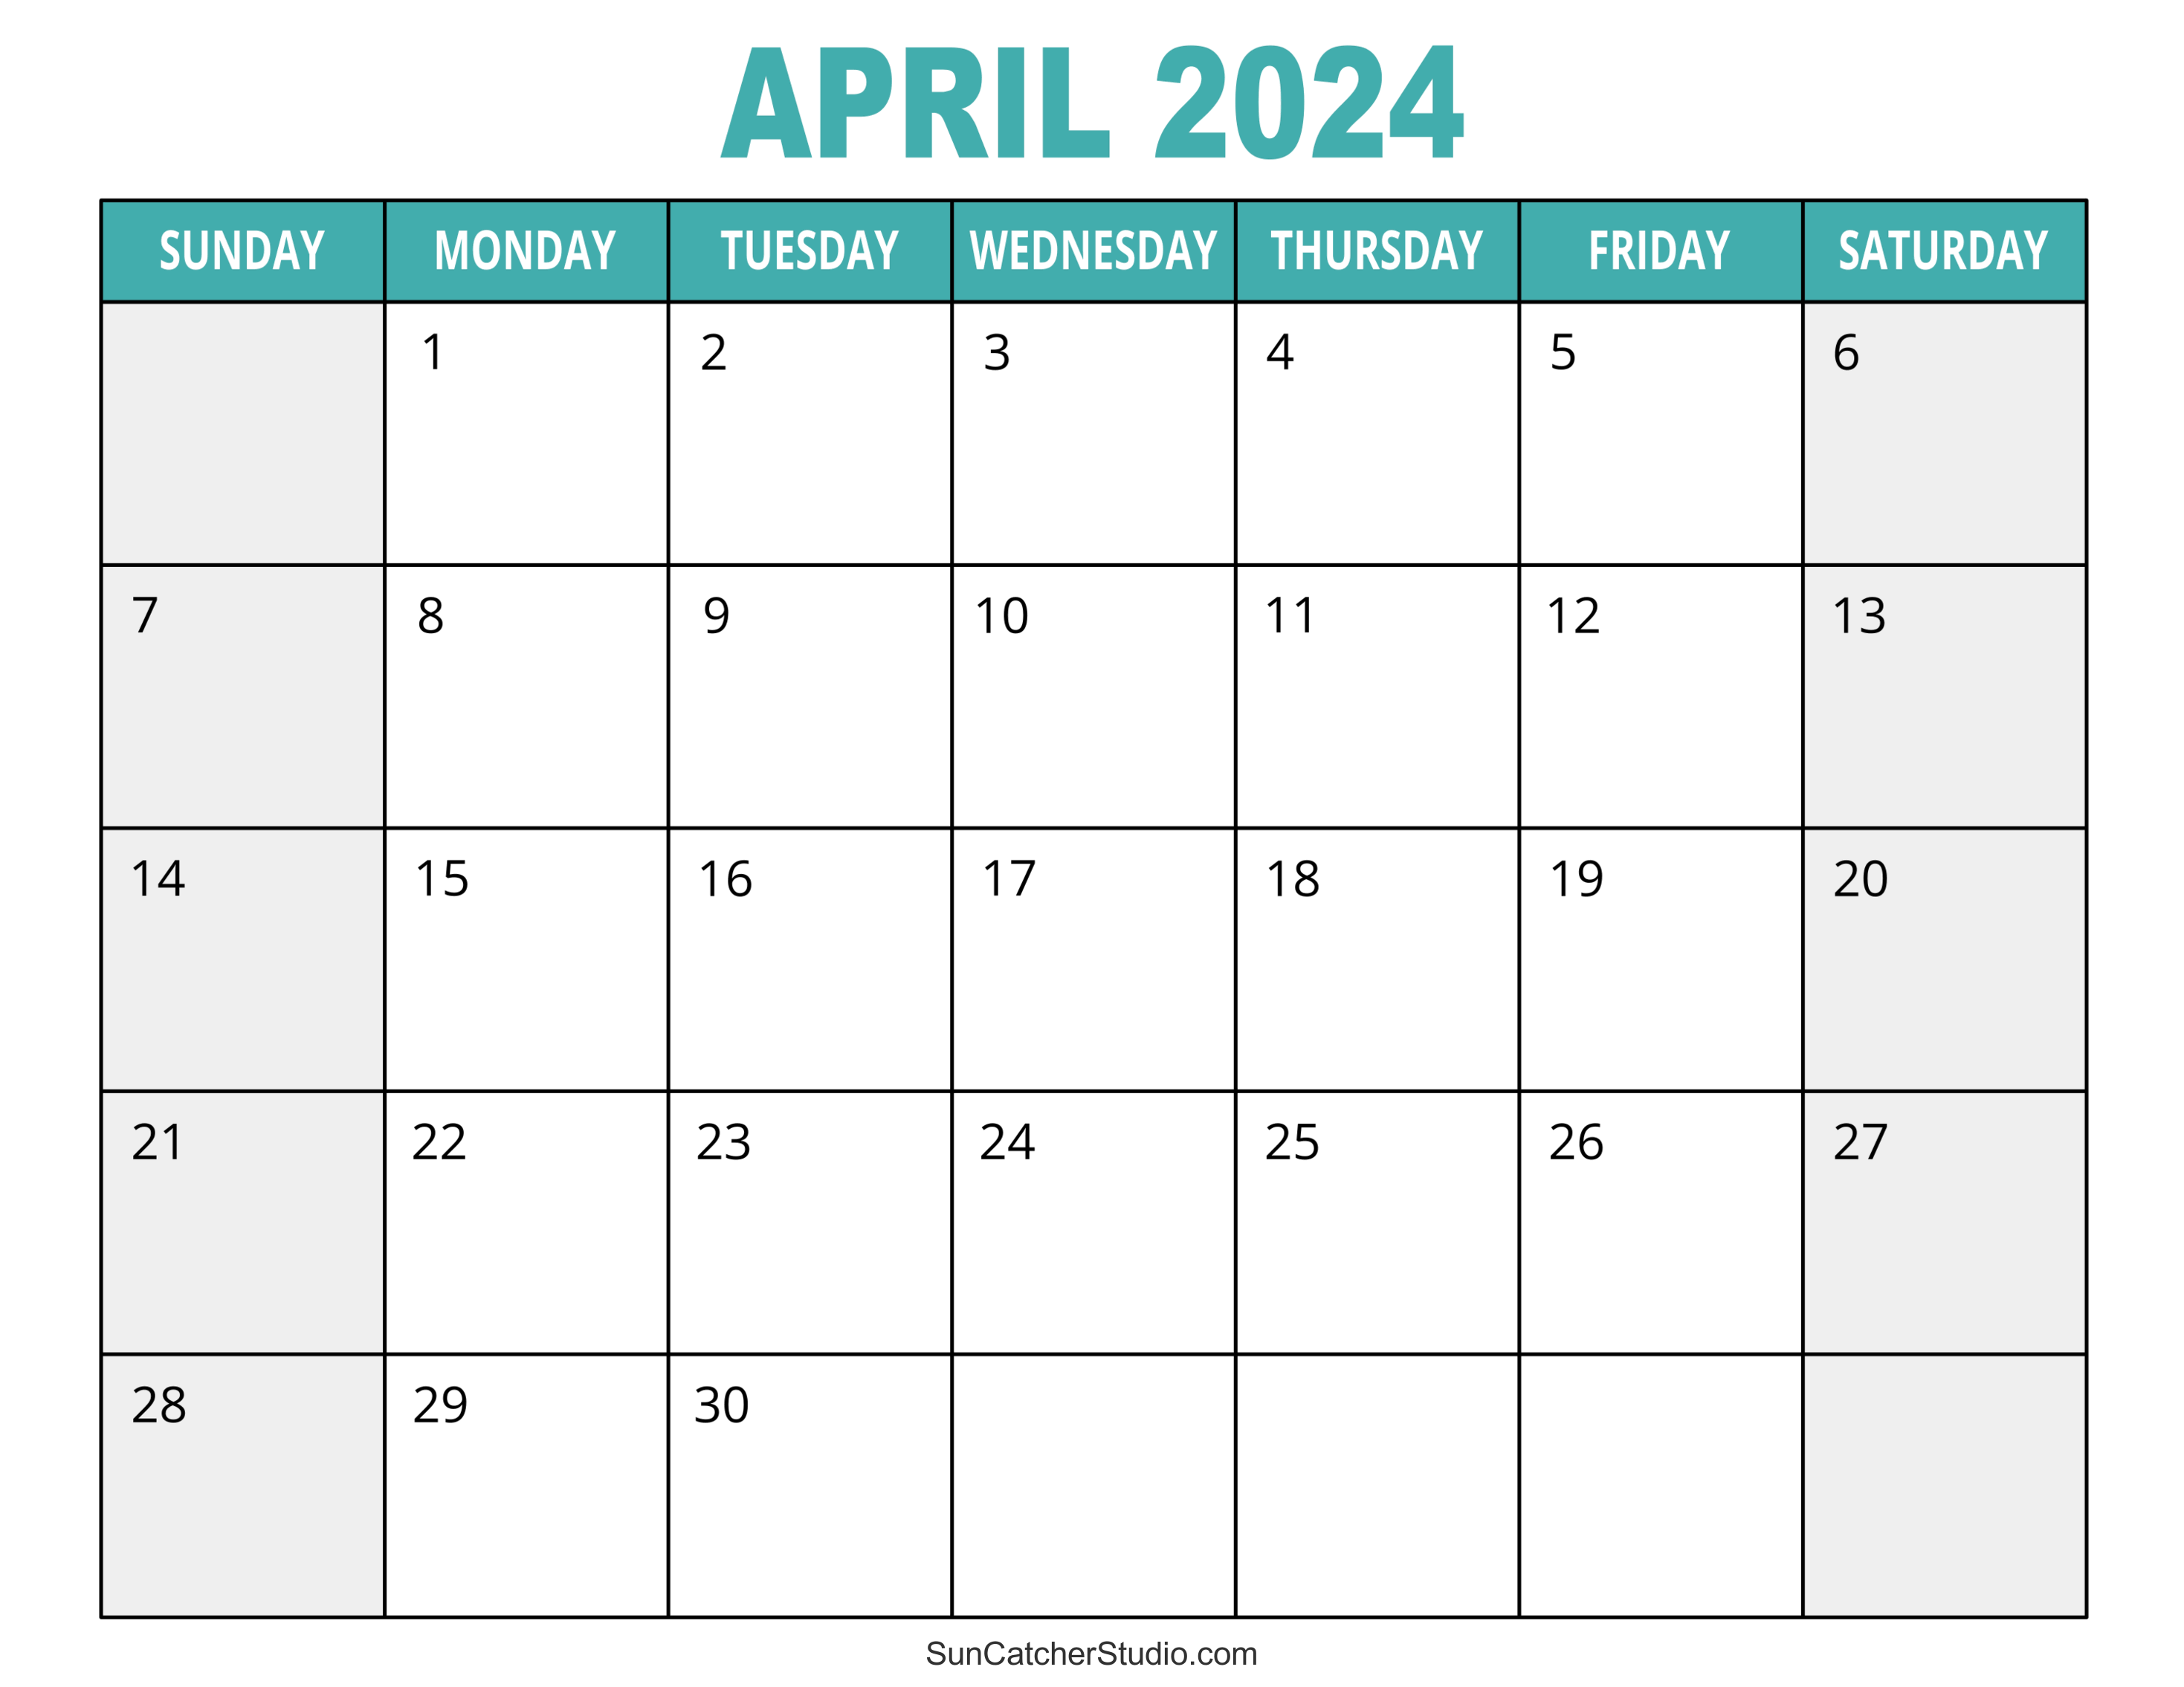 April 2024 Calendar (Free Printable) – Diy Projects, Patterns pertaining to Free Printable April 2024 Calendar Large